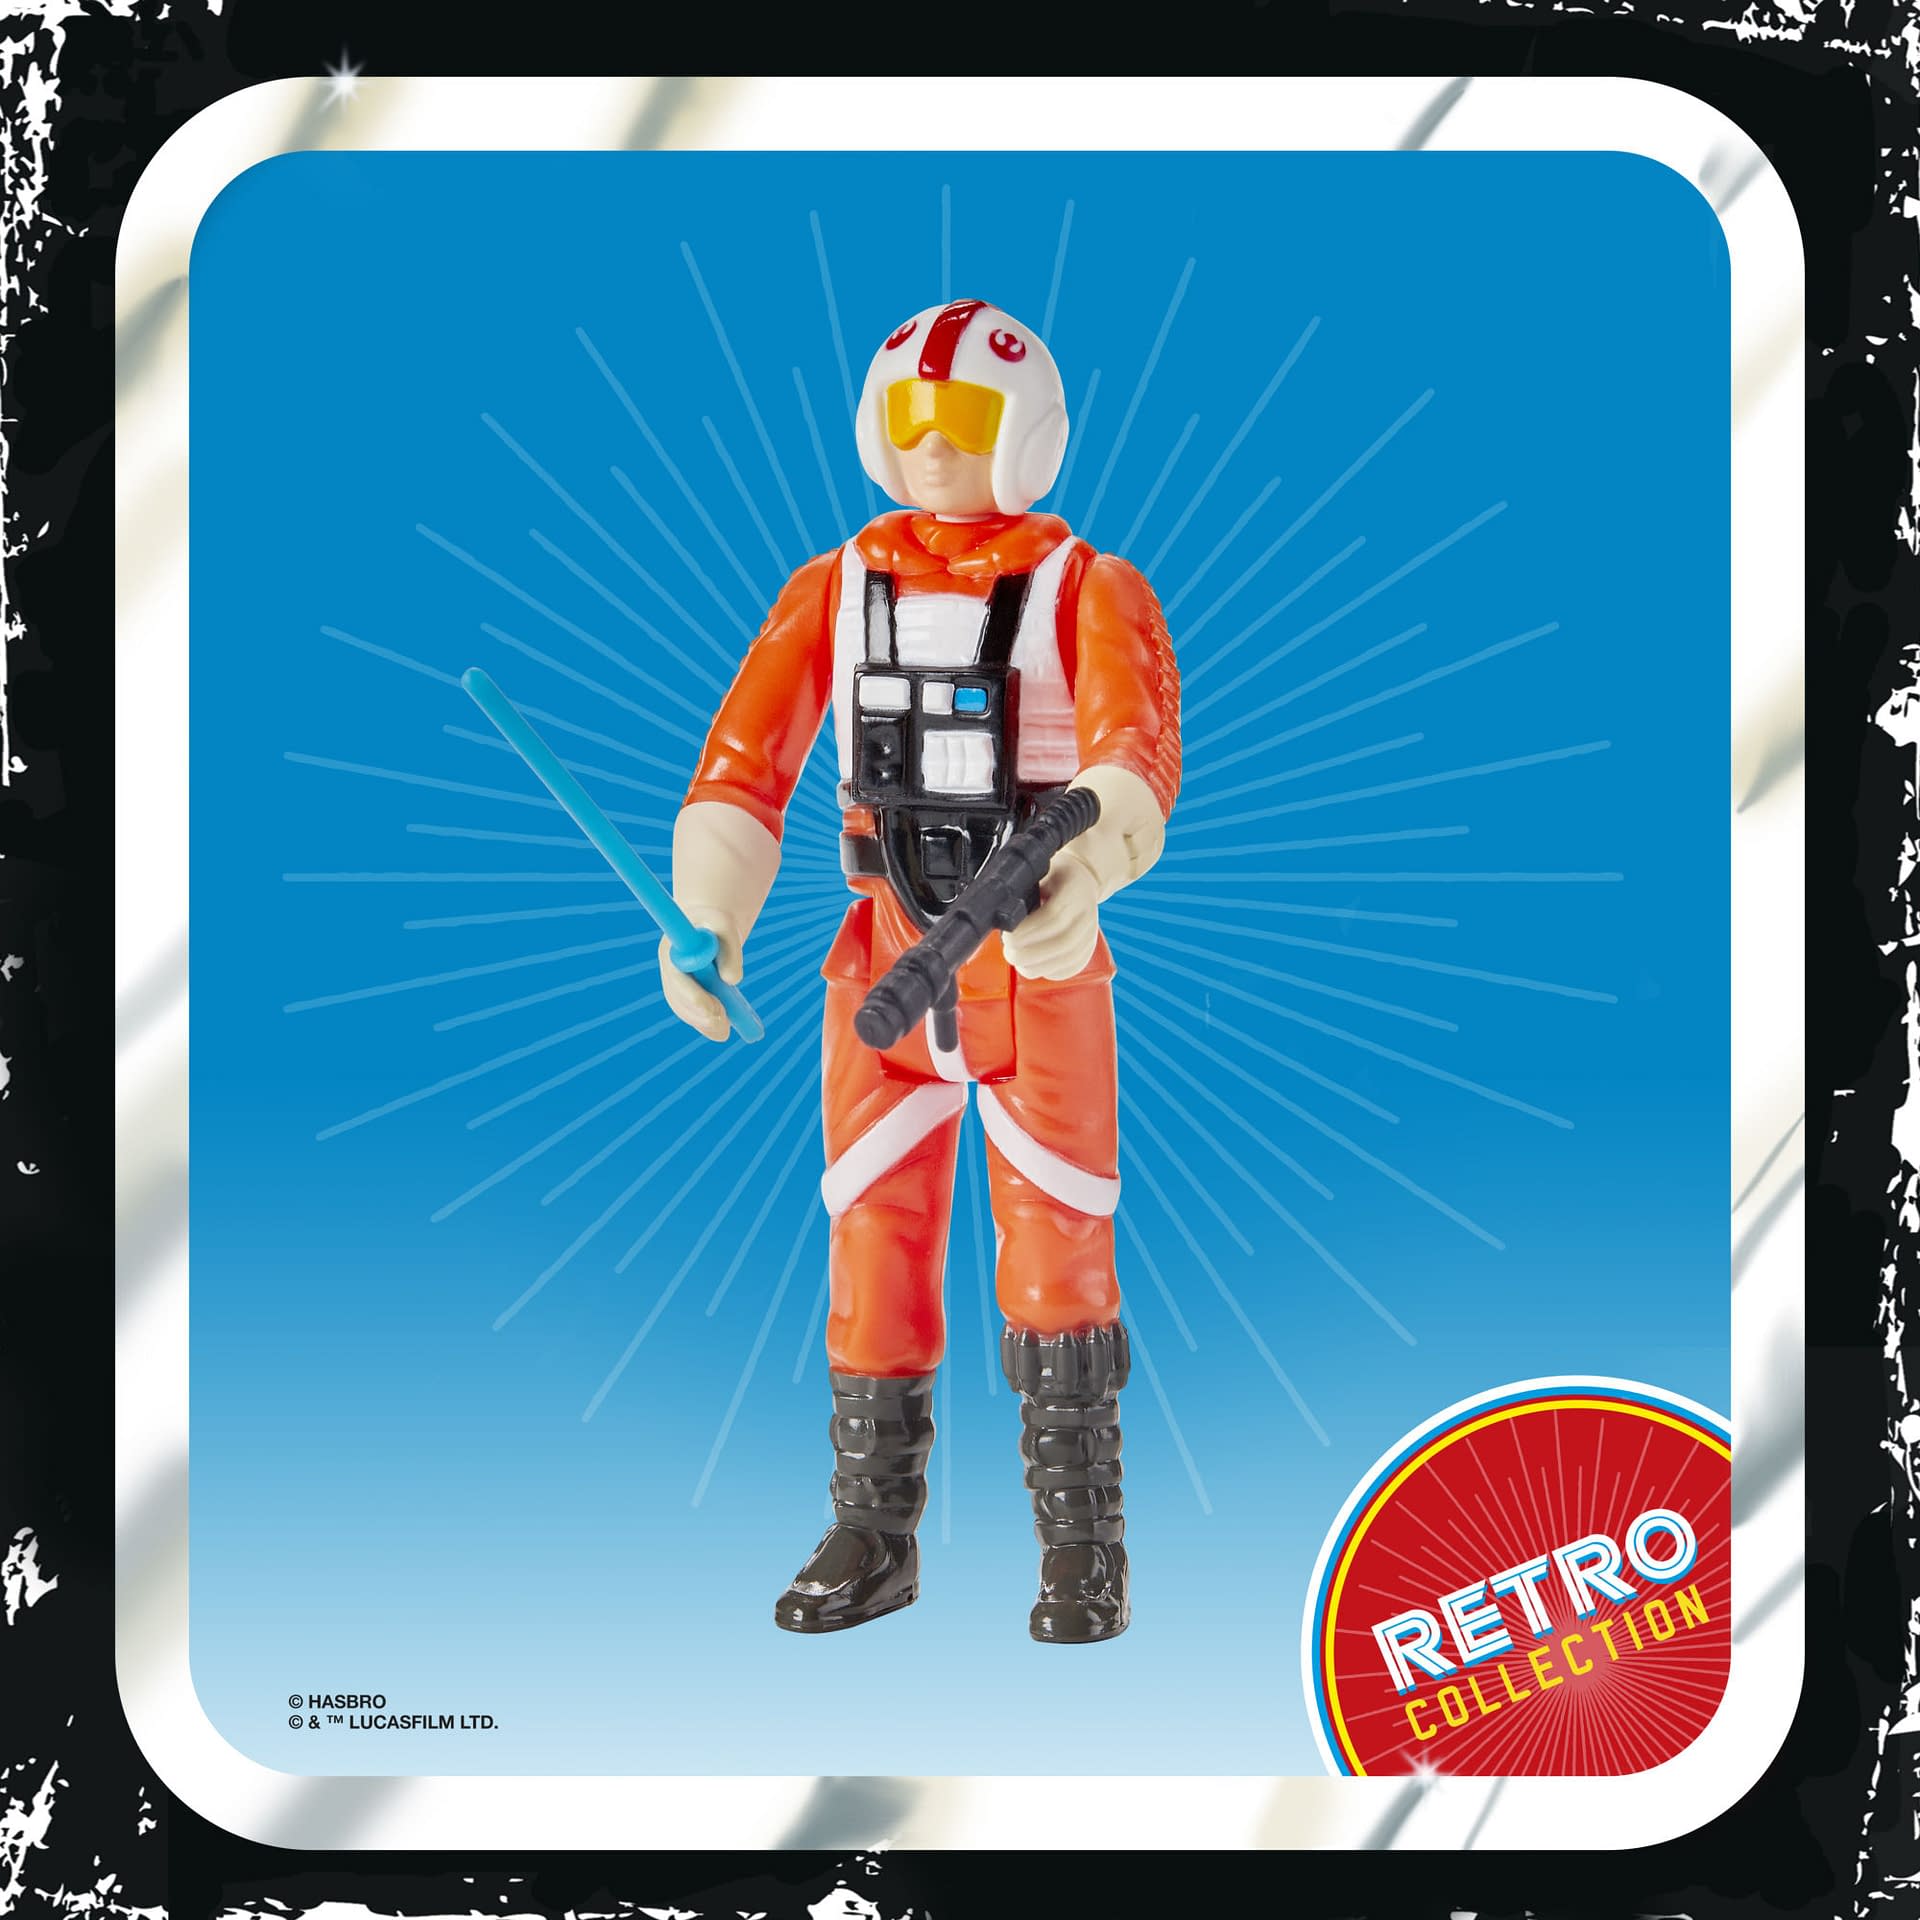 Unreleased Retro Star Wars Figure Coming Soon from Hasbro 